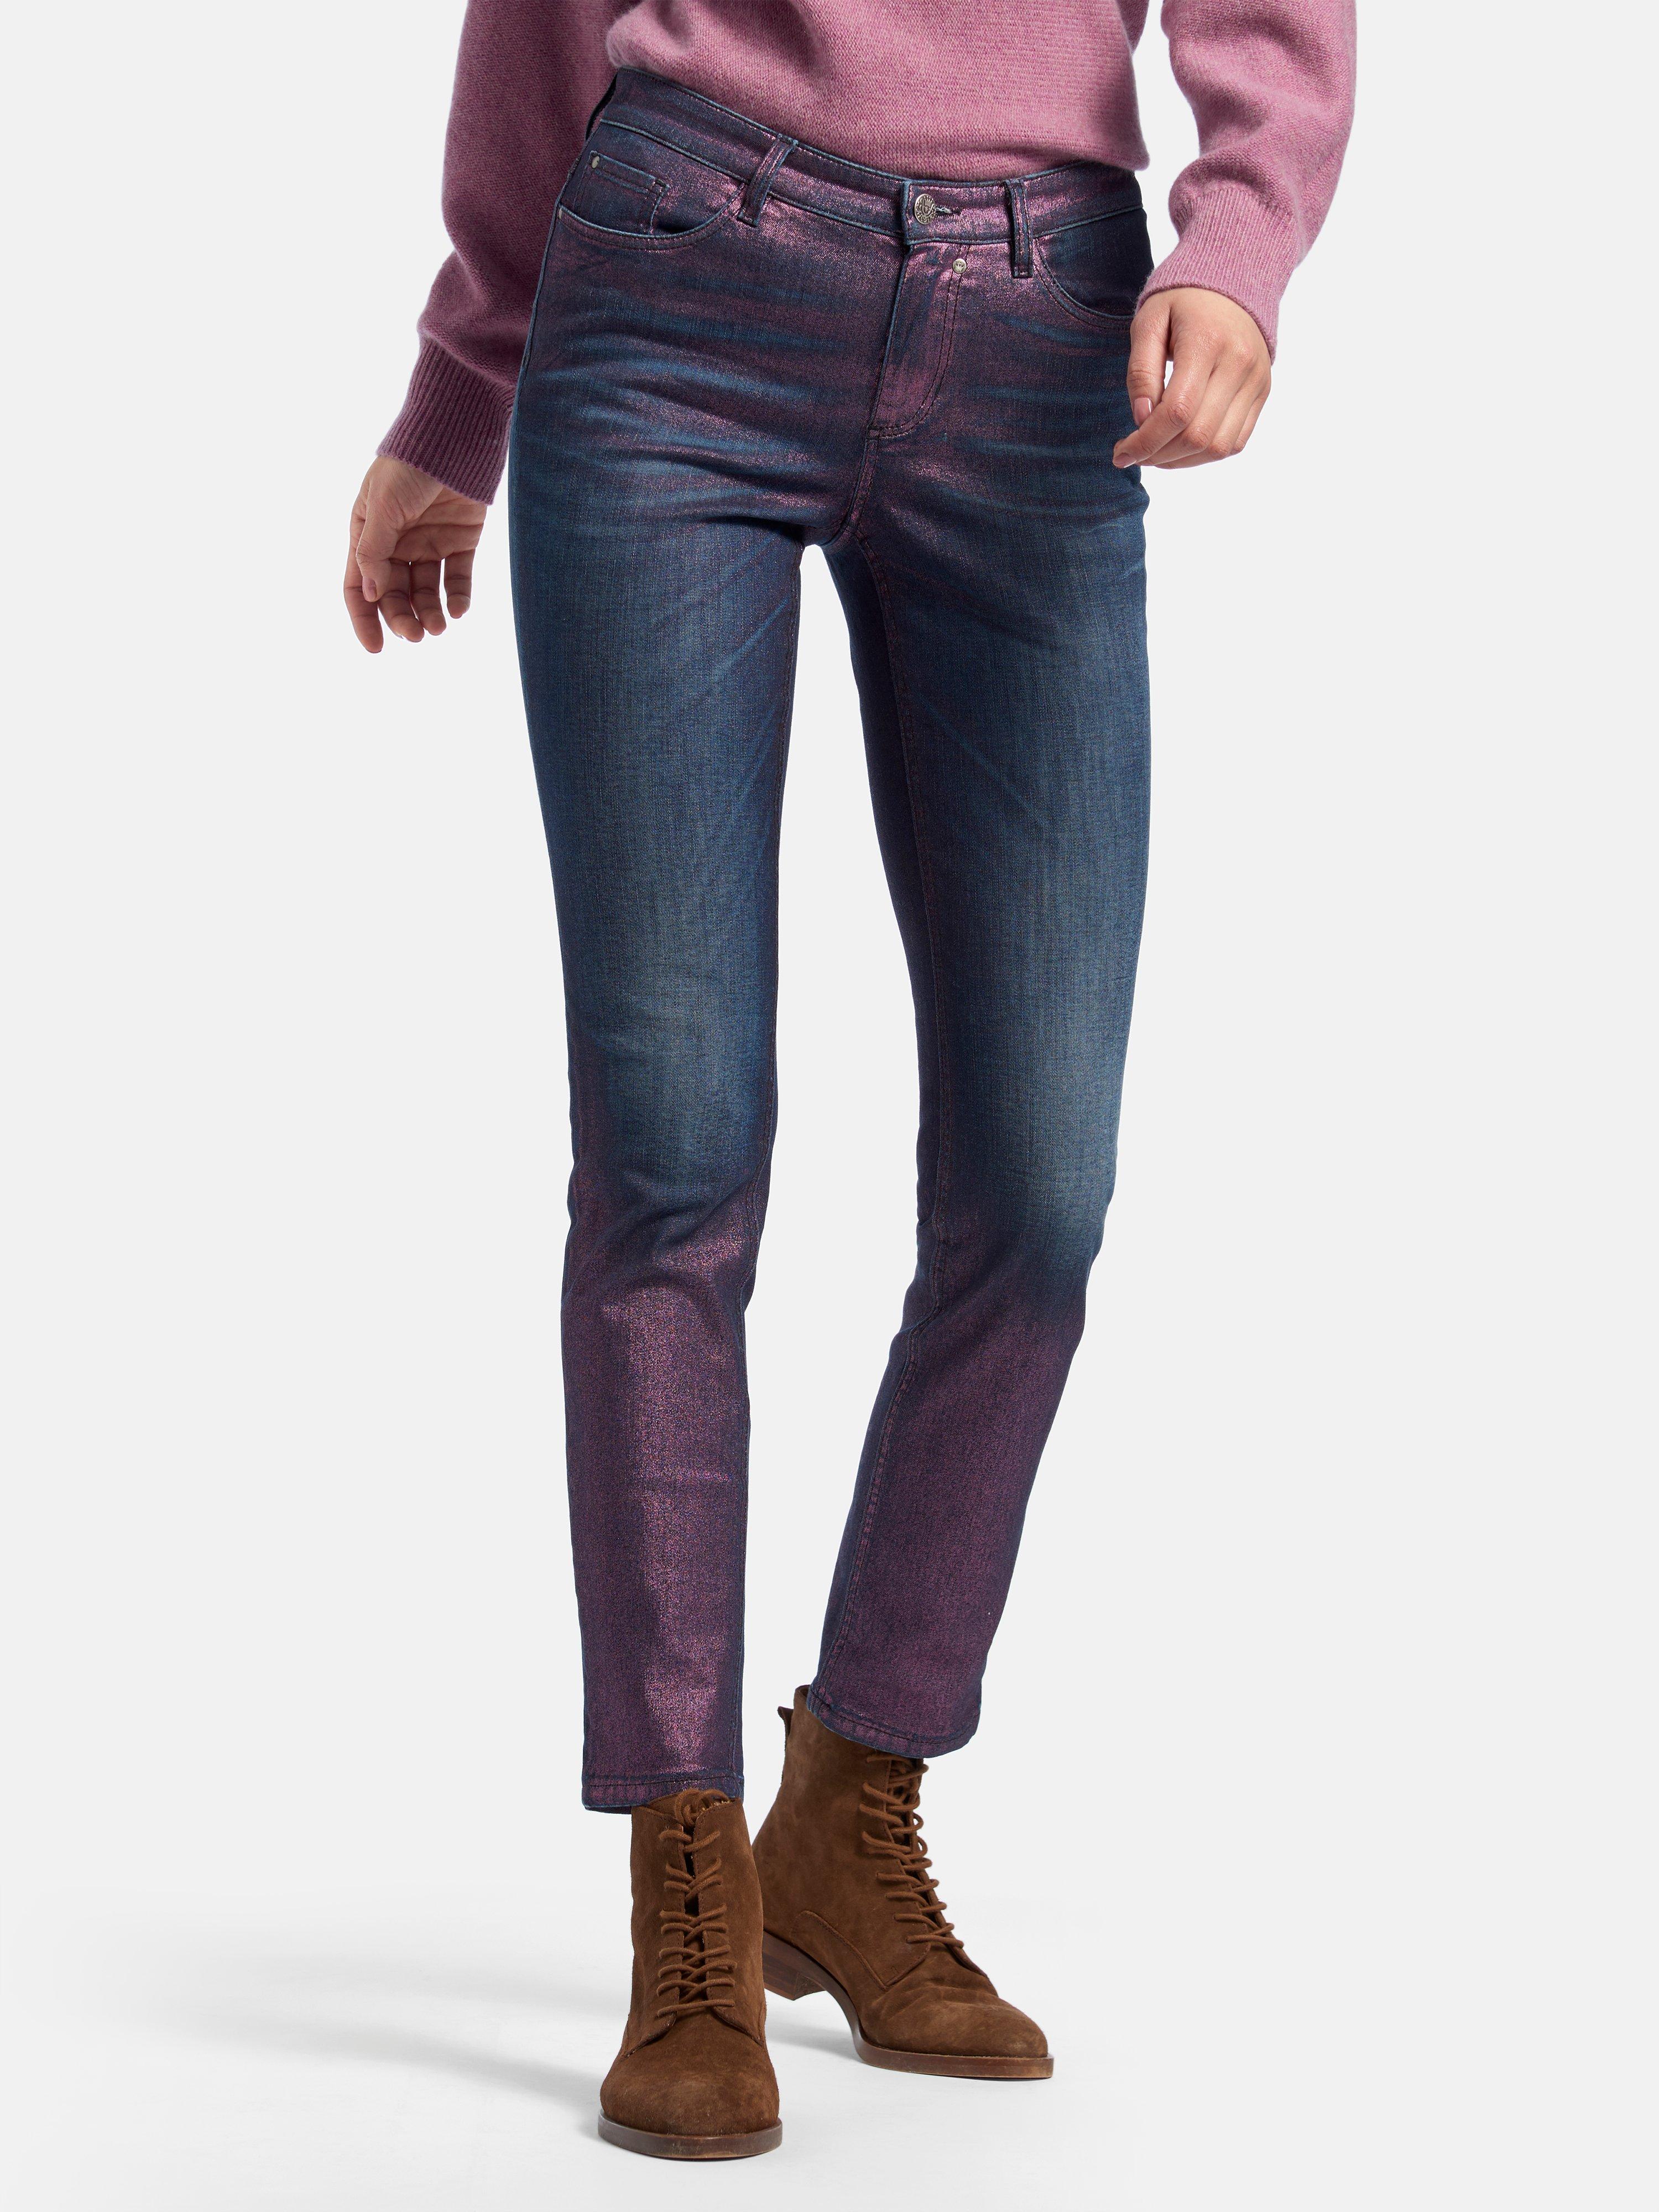 Glücksmoment - Skinny-jeans model Gill met glans-coating